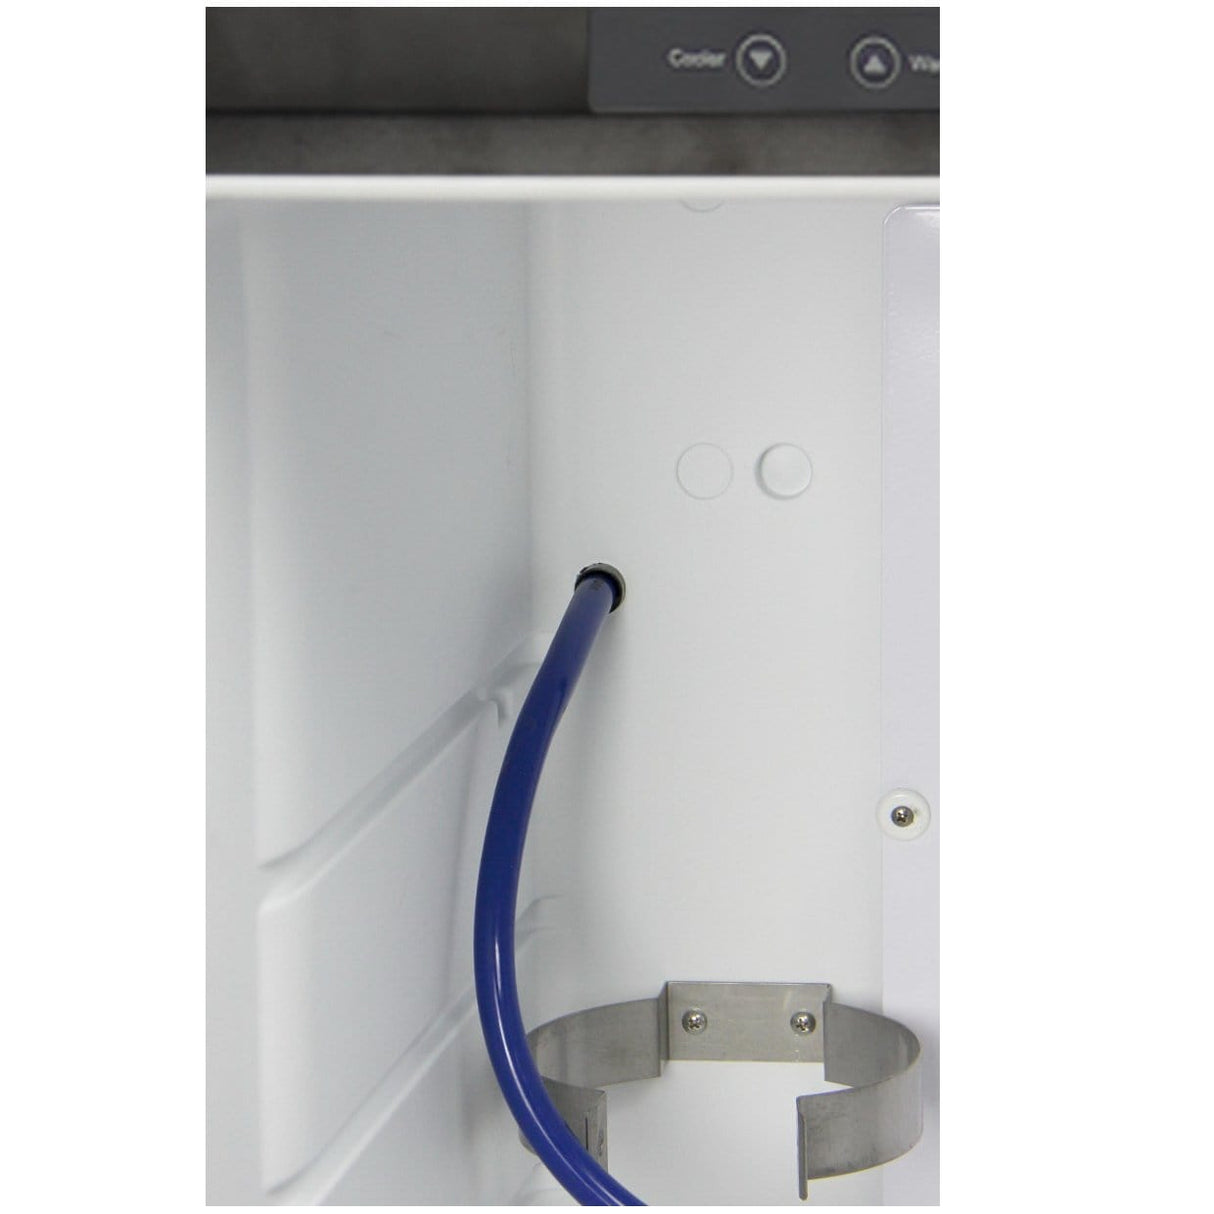 Kegco Three Faucet Digital Kombucha Dispense System - Black Matte Cabinet and Black Stainless Steel Door (KOM30X-3NK)